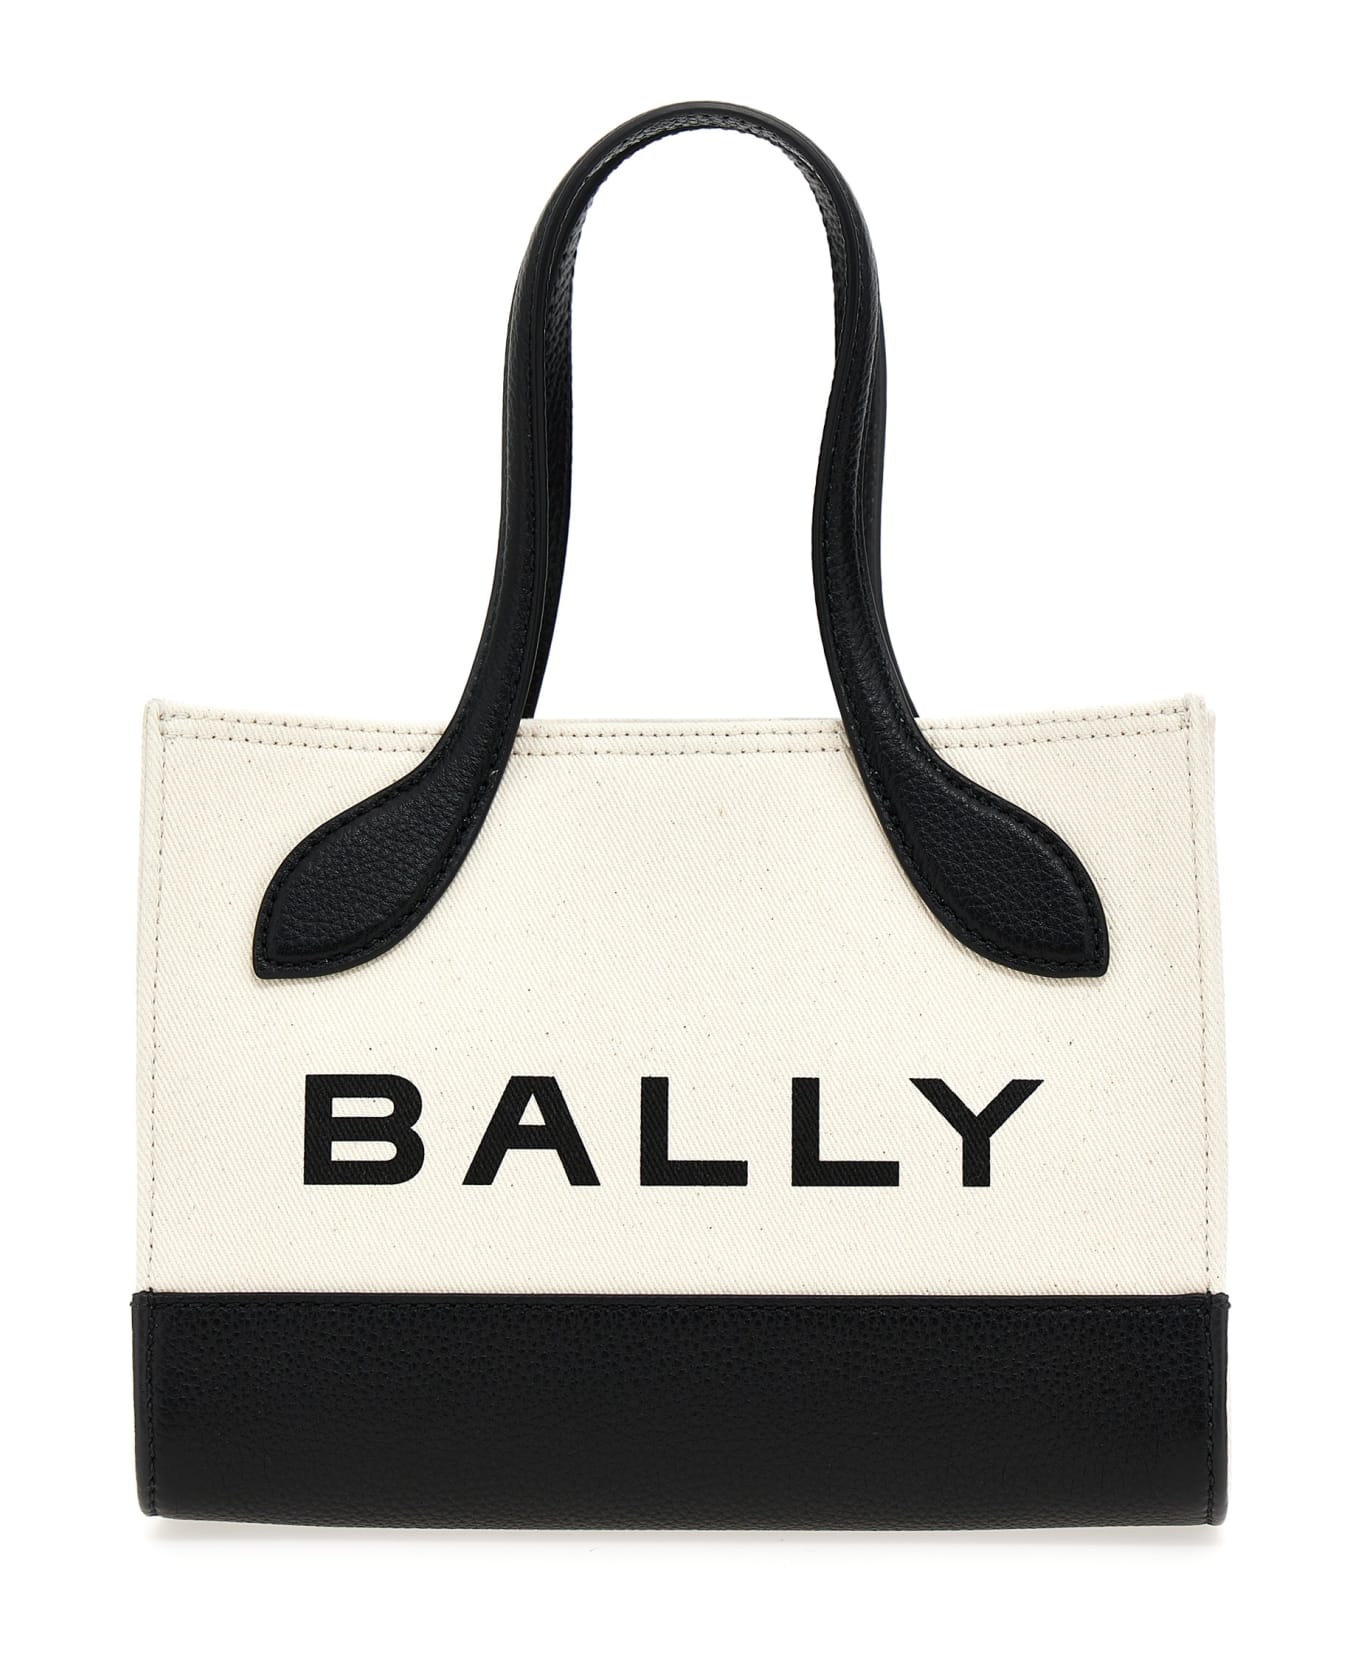 Bally Bar Keep On Shopper - White/Black